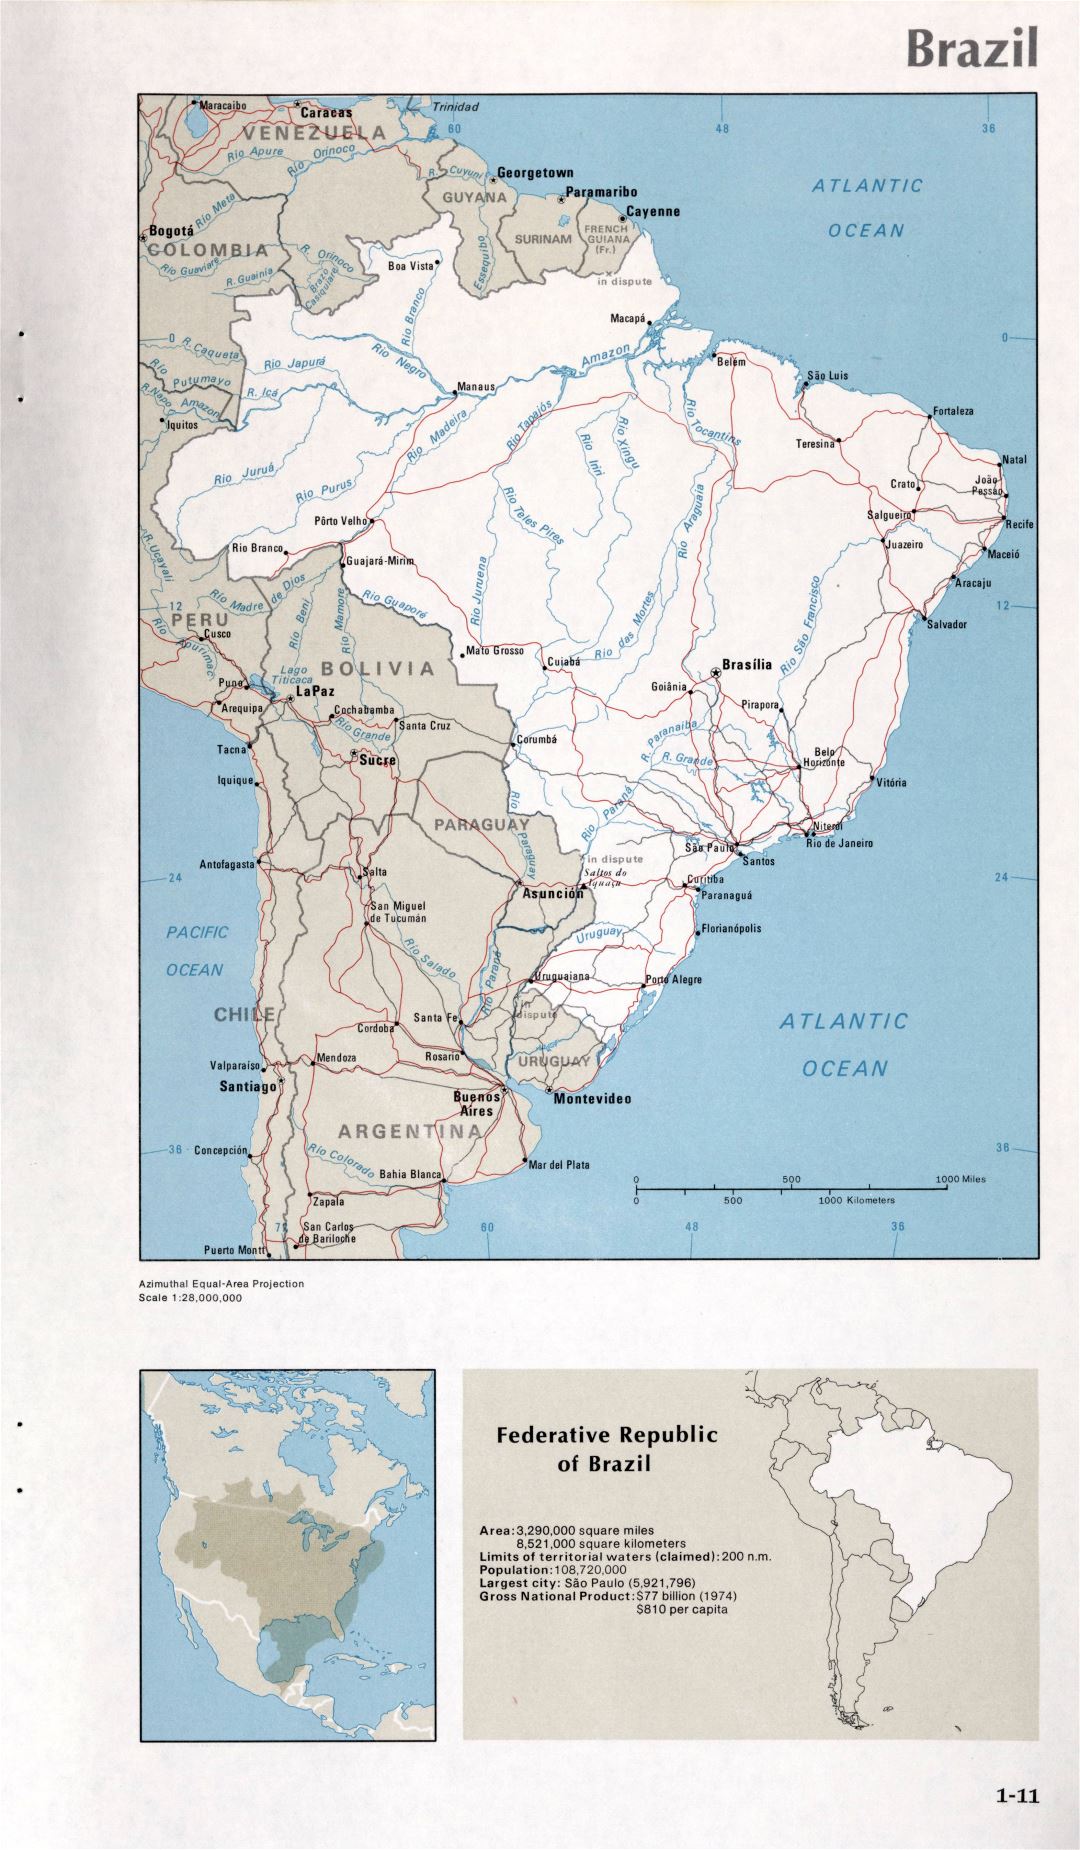 Map of Brazil (1-11)